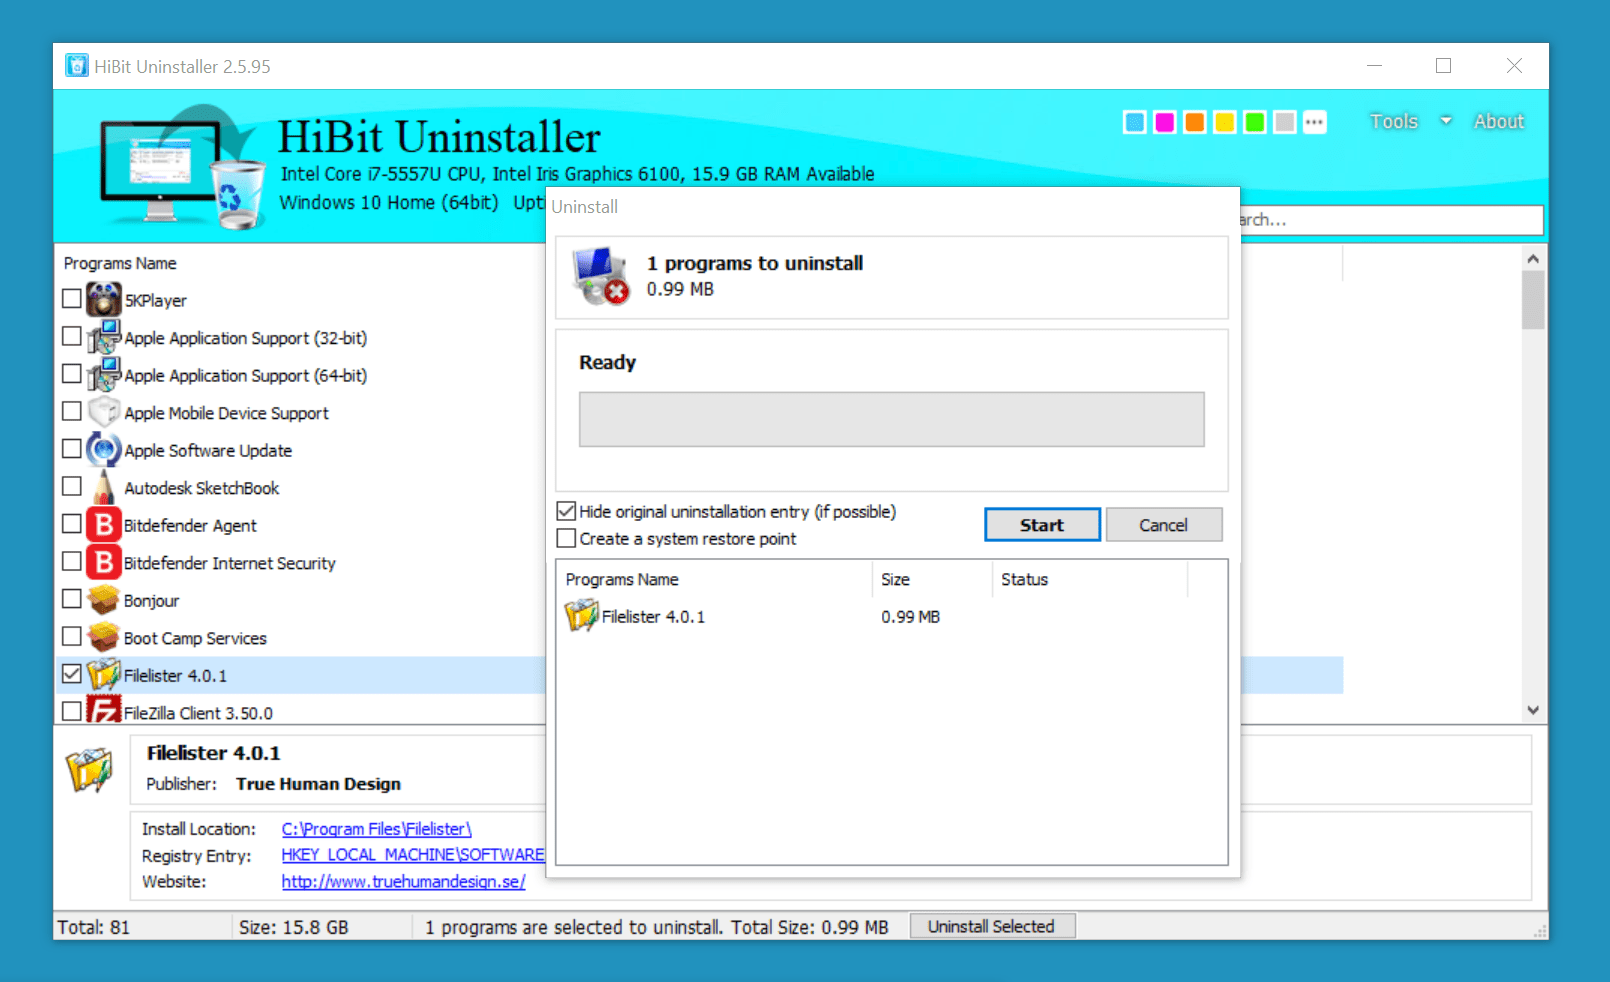 download the new for windows HiBit Uninstaller 3.1.62